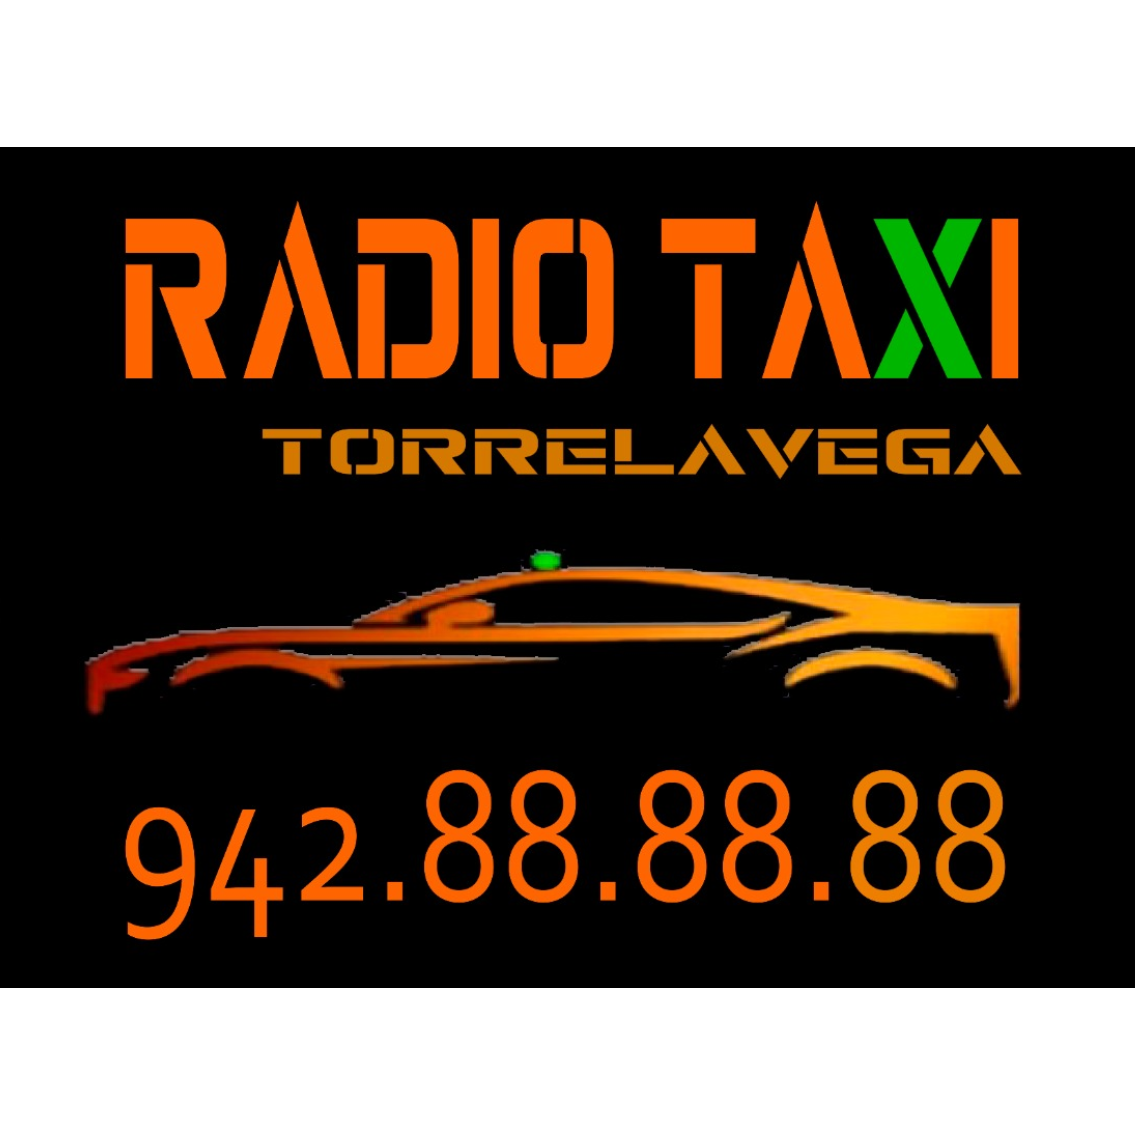 Radio Taxi Torrelavega Logo